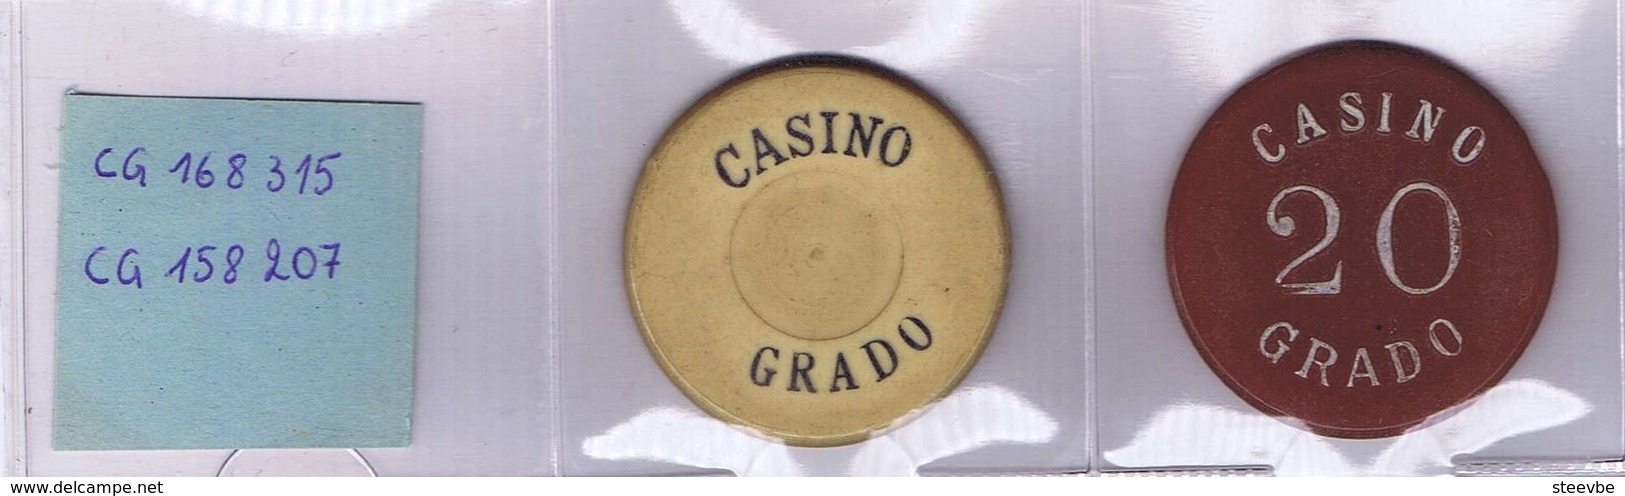 Casino Chip Fiche Set Casino De Grado Espagne Spain - Casino